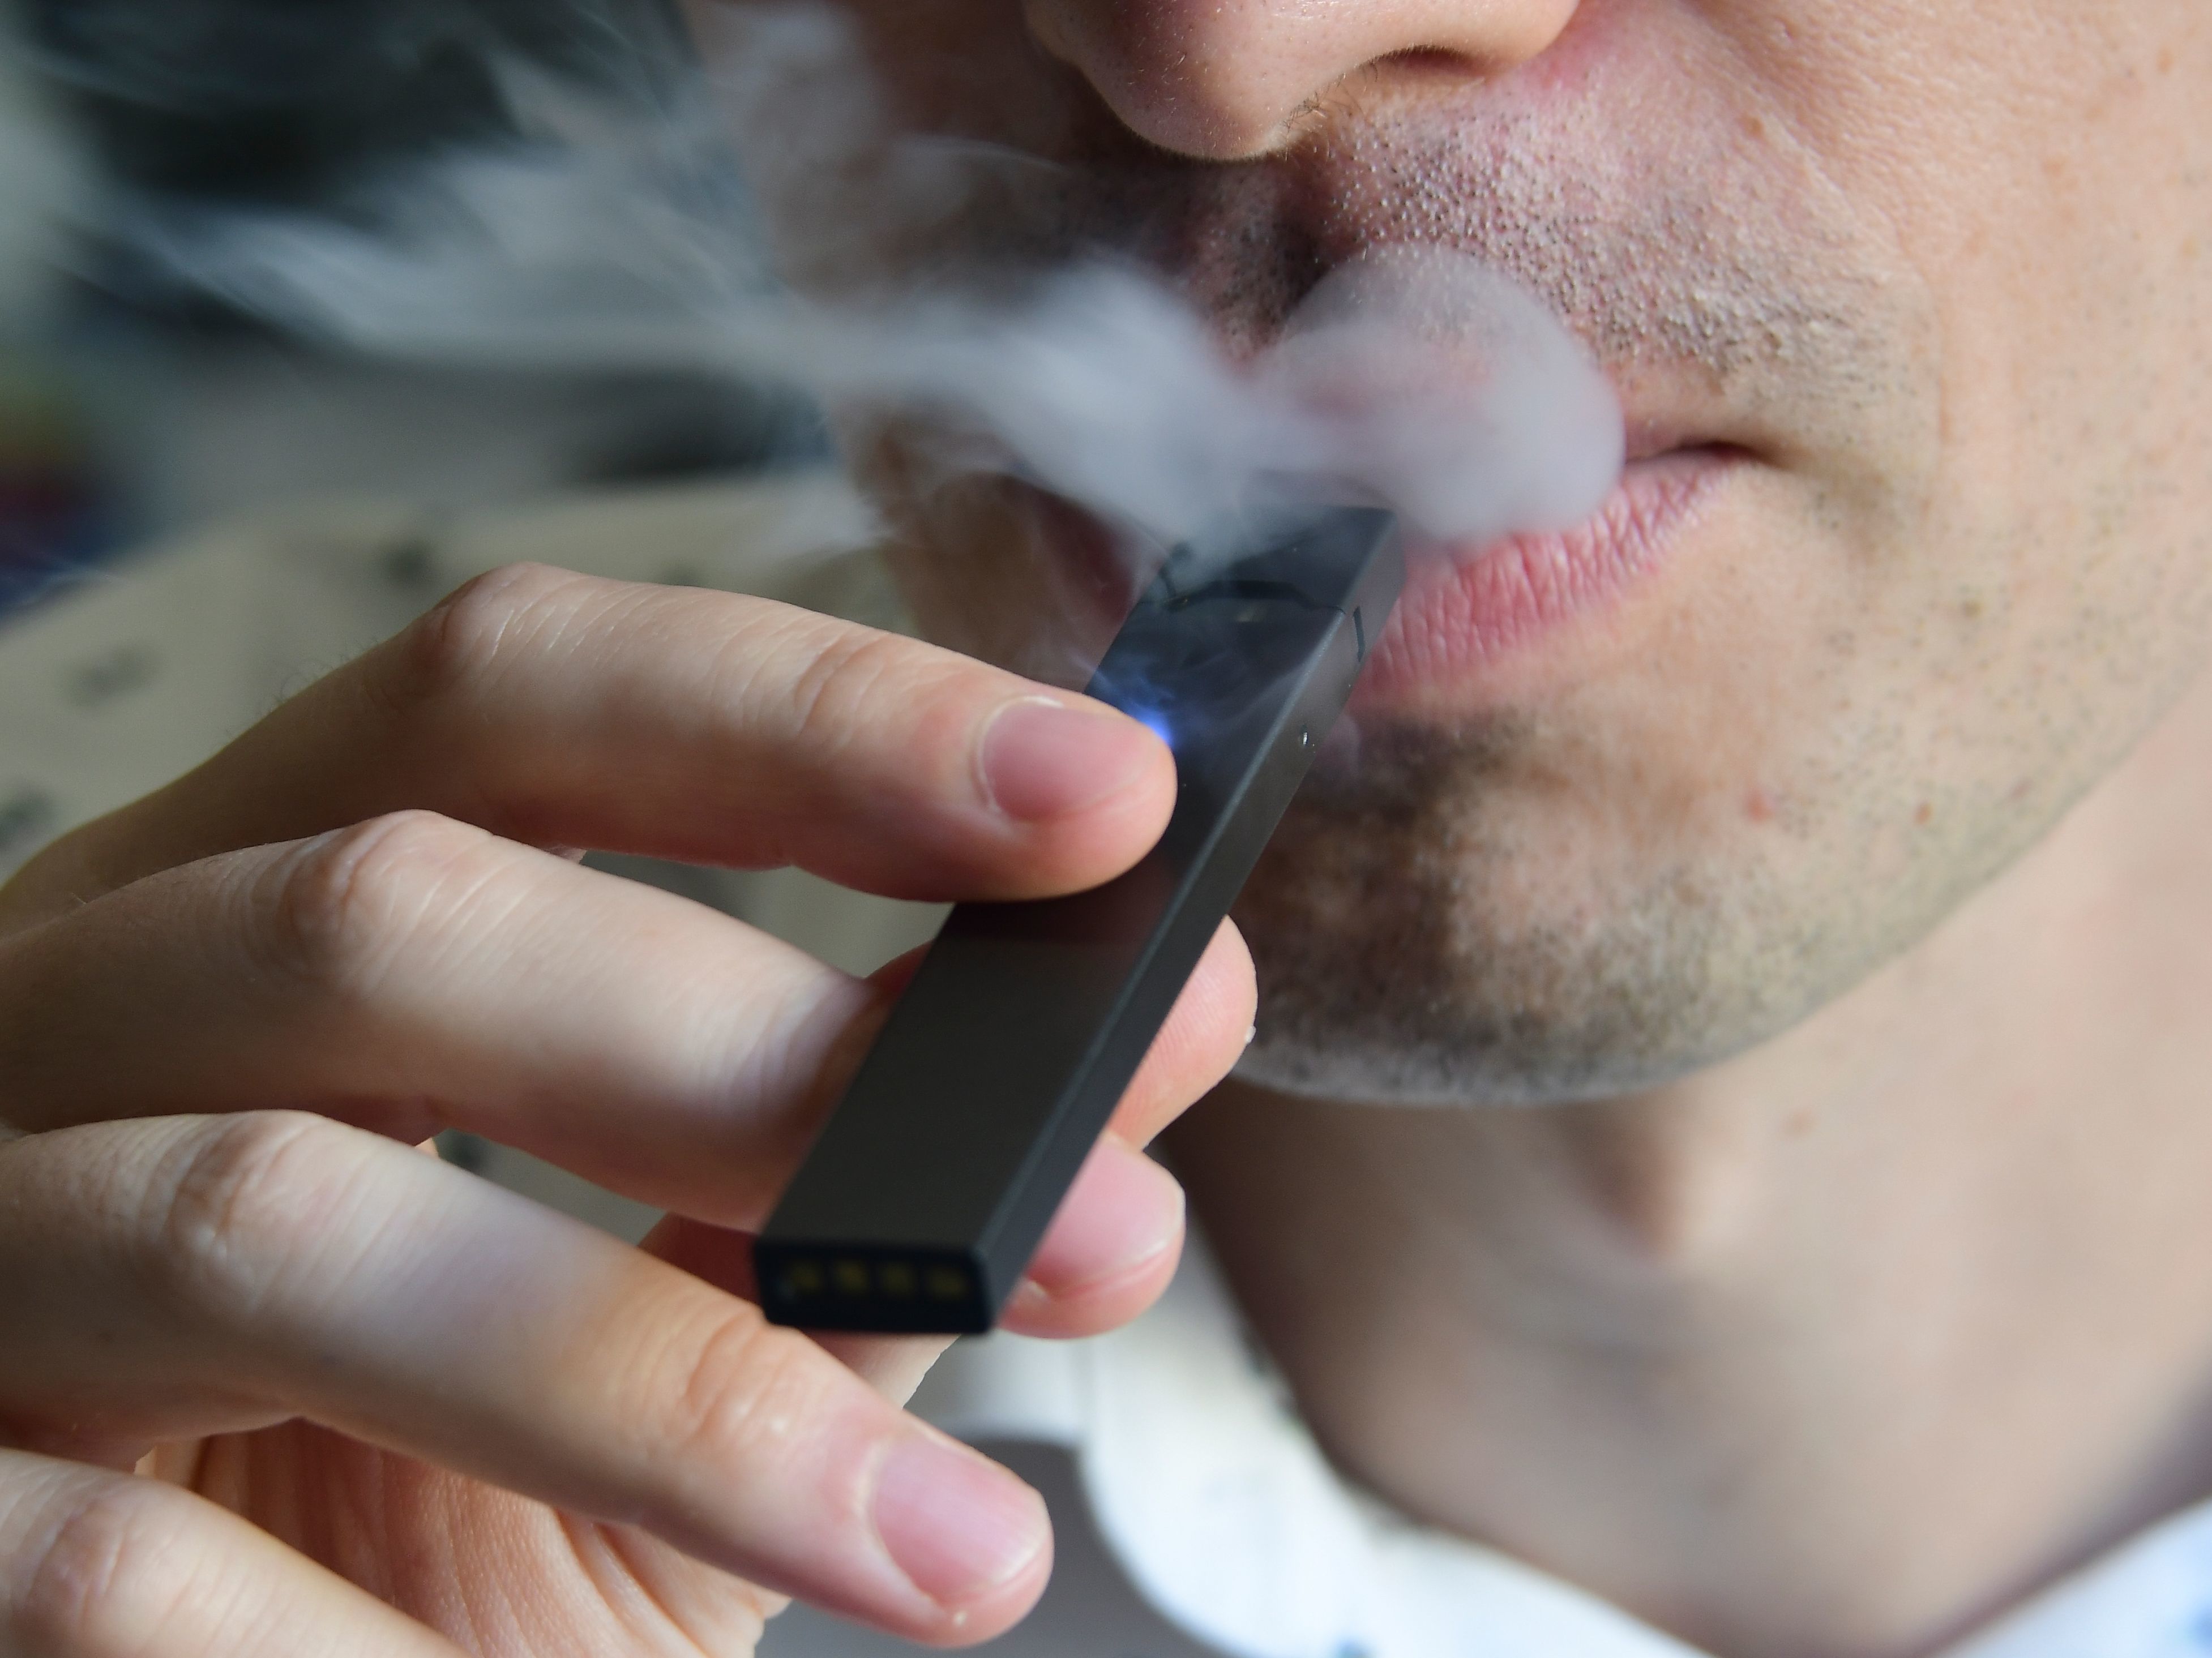 North Carolina AG sues e-cigarette maker Juul for downplaying dangers